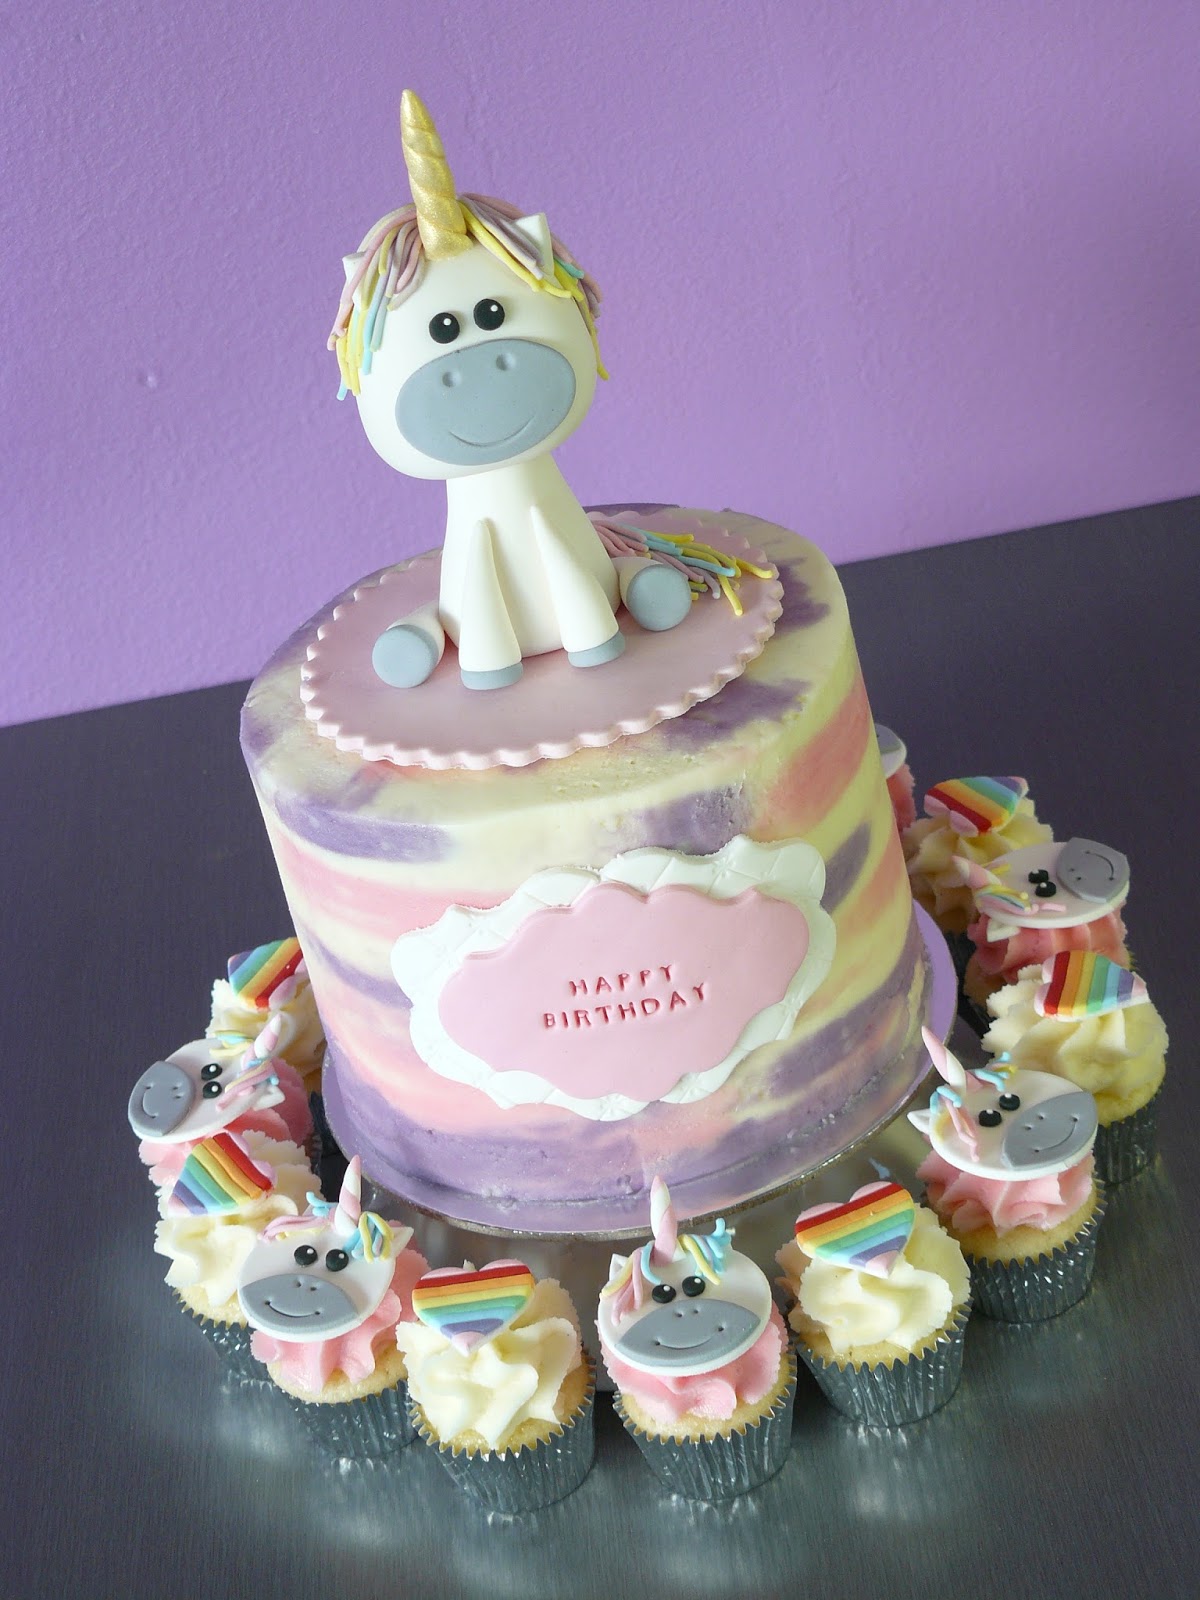 The Cup Cake Taste - Brisbane Cupcakes: Unicorn Cupcakes